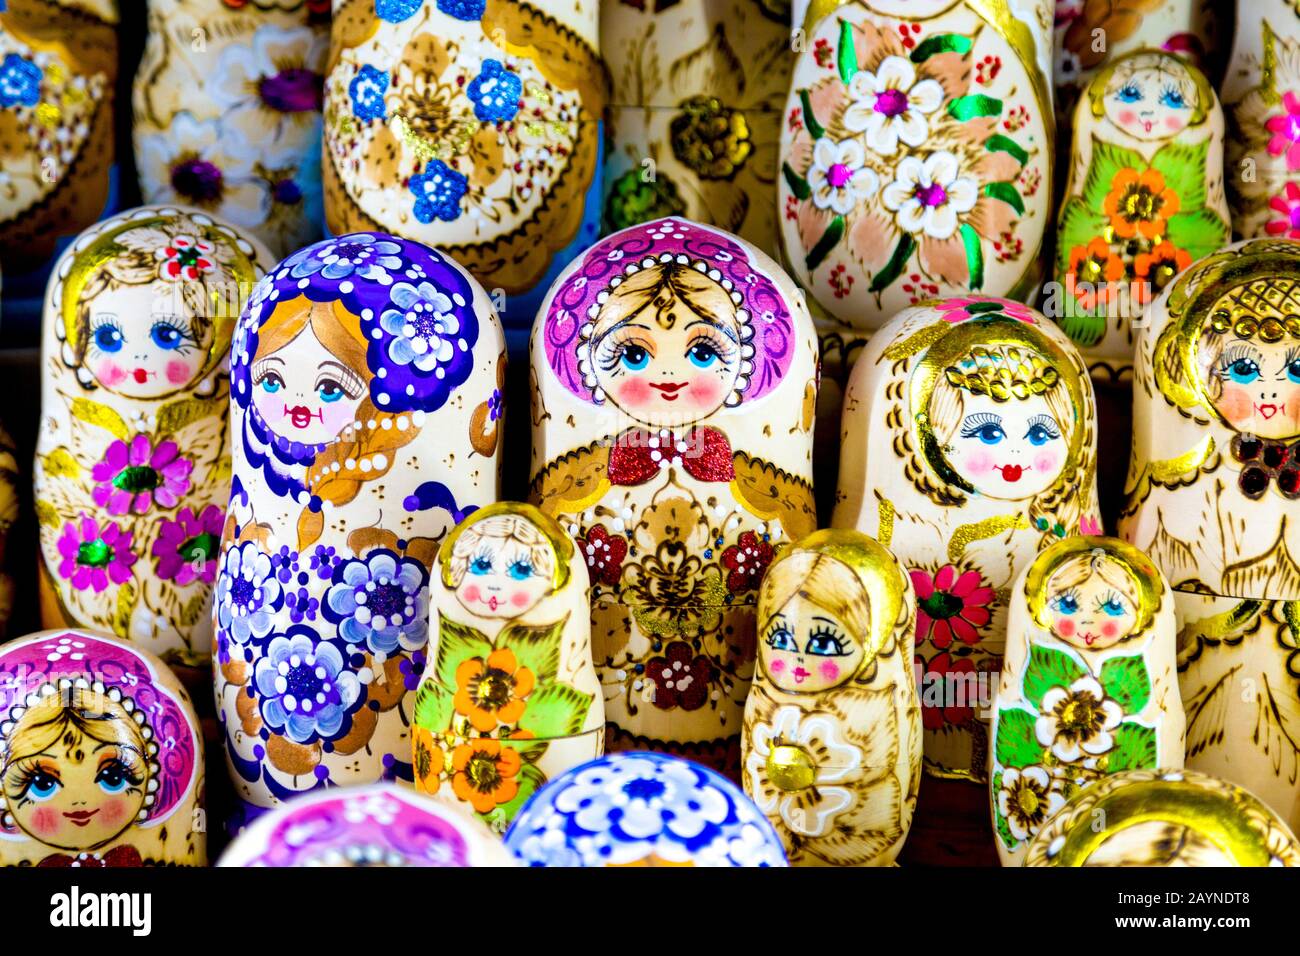 Souvenir Matryoshka dolls at a stall in the Central Market Hall (Nagyvásárcsarnok), Budapest, Hungary Stock Photo